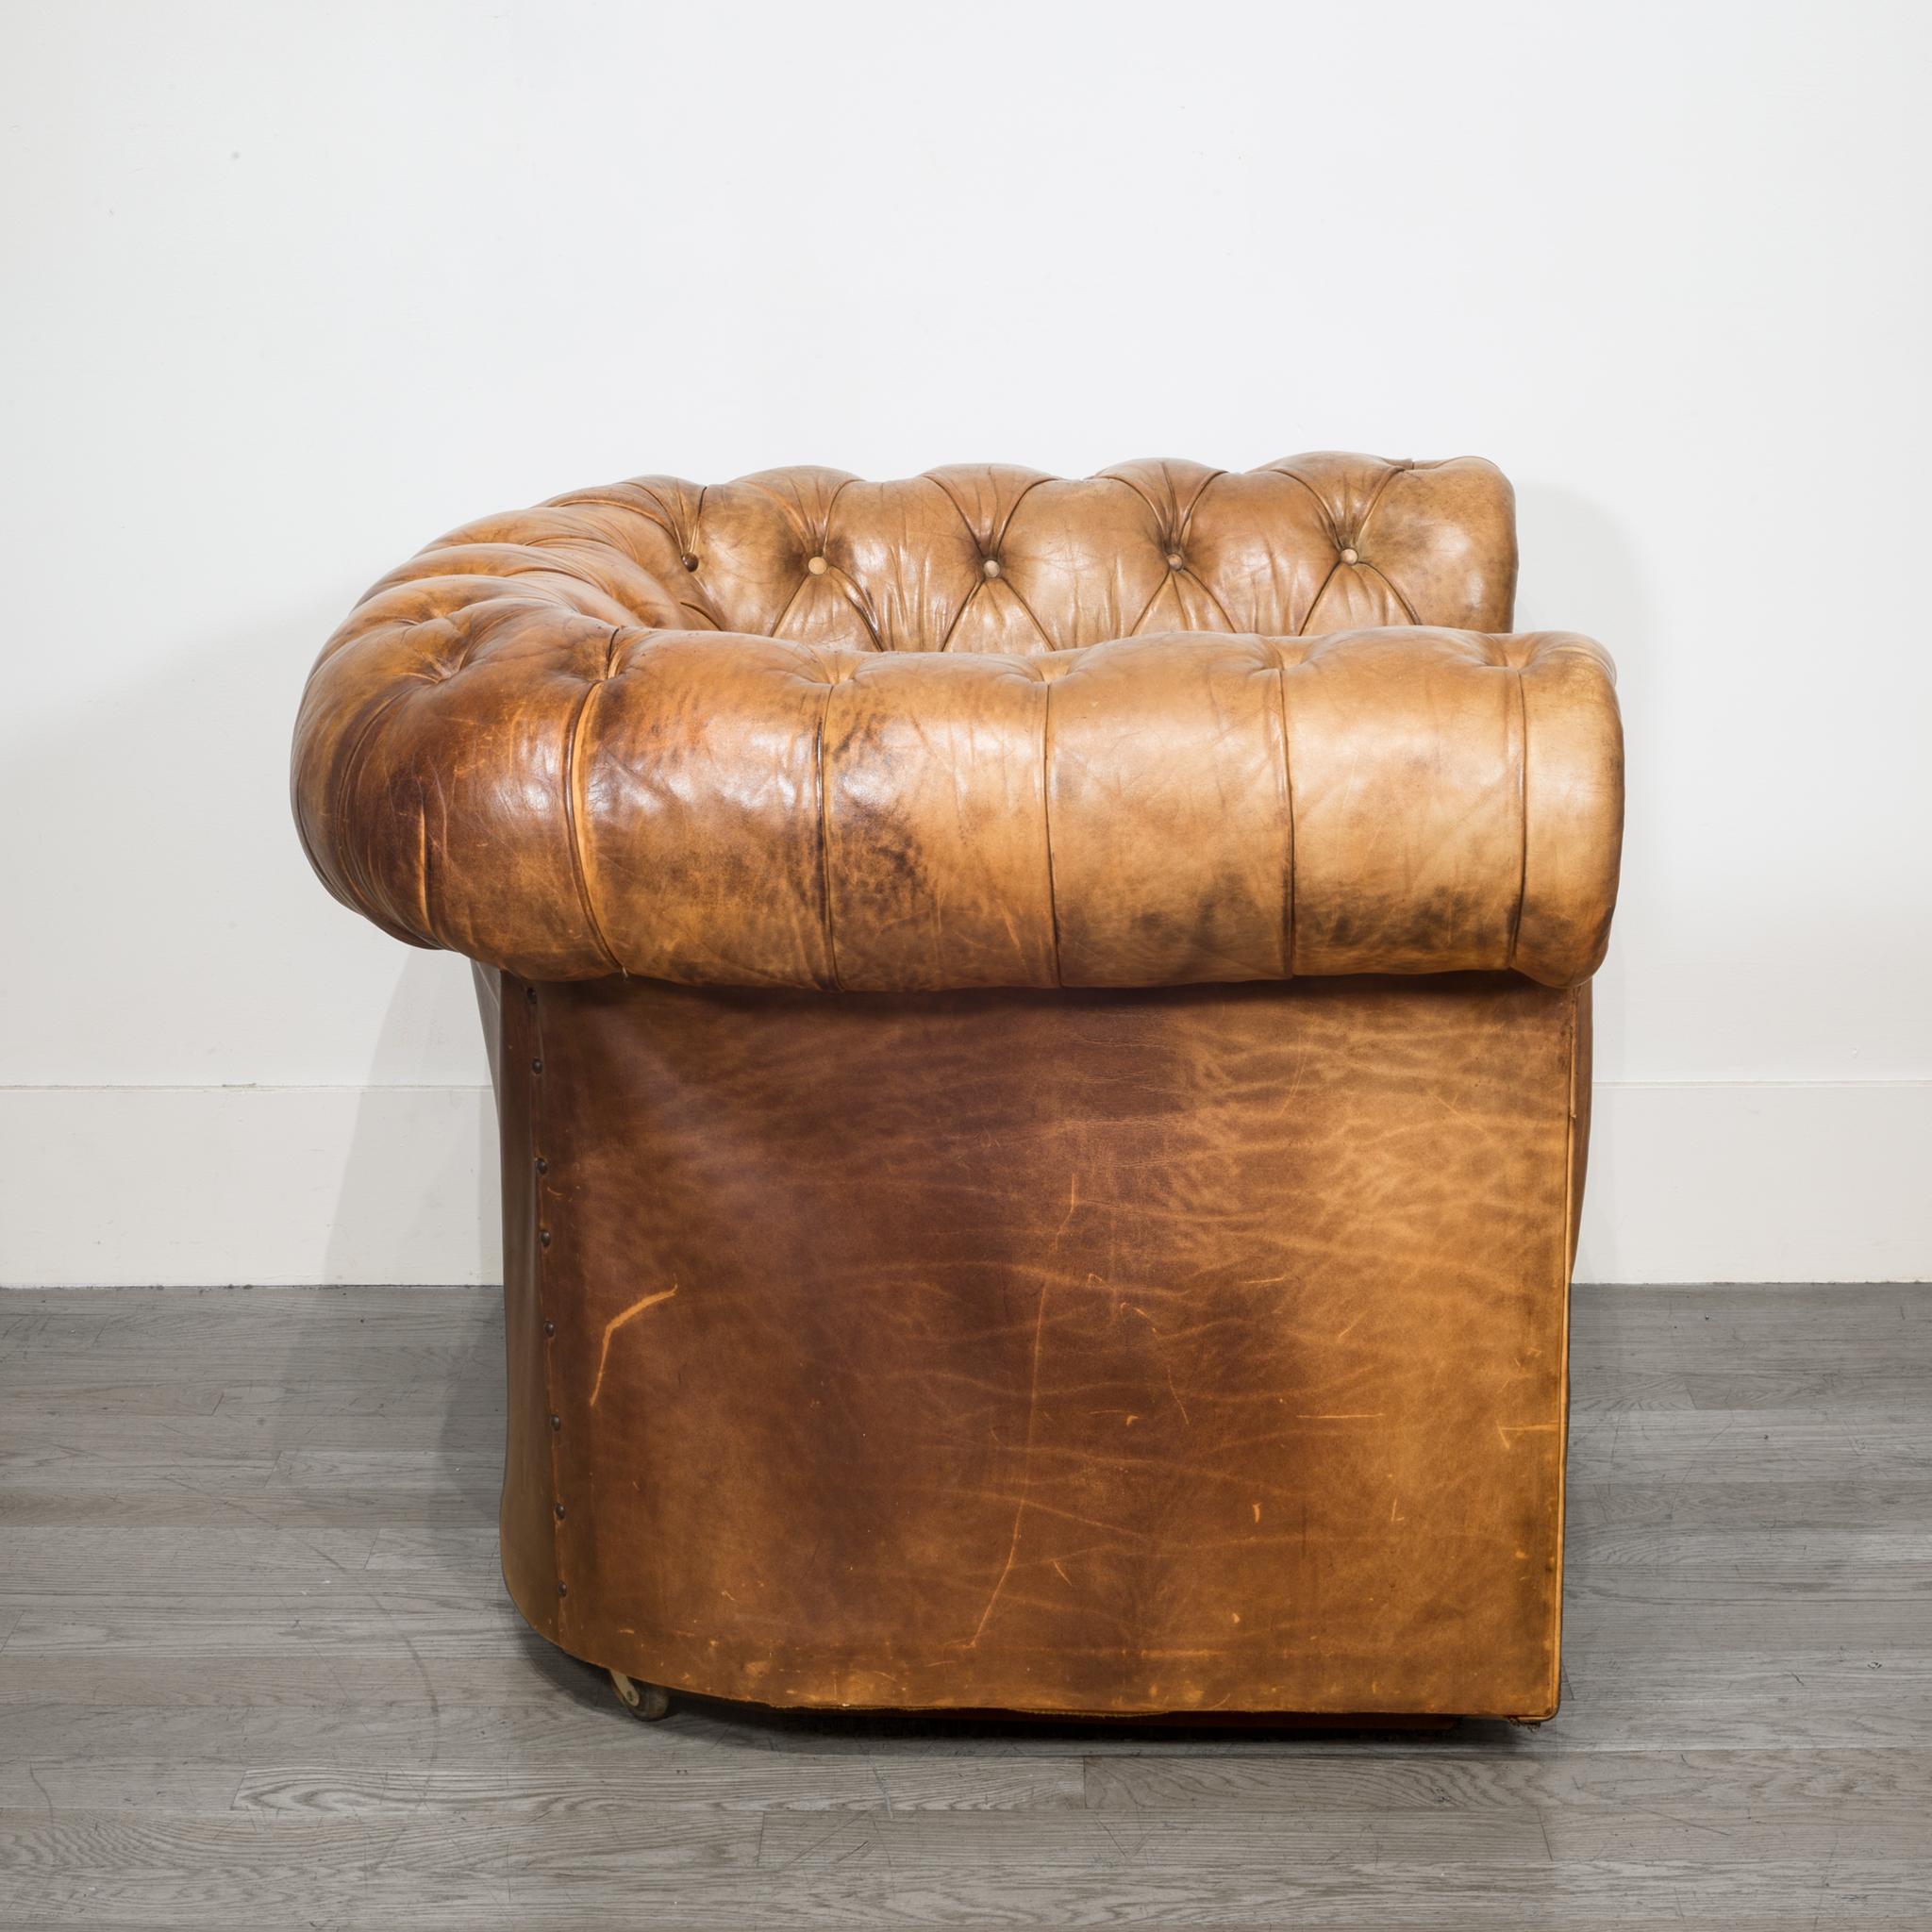 Metal Leather Chesterfield Club Chair, circa 1950-1970